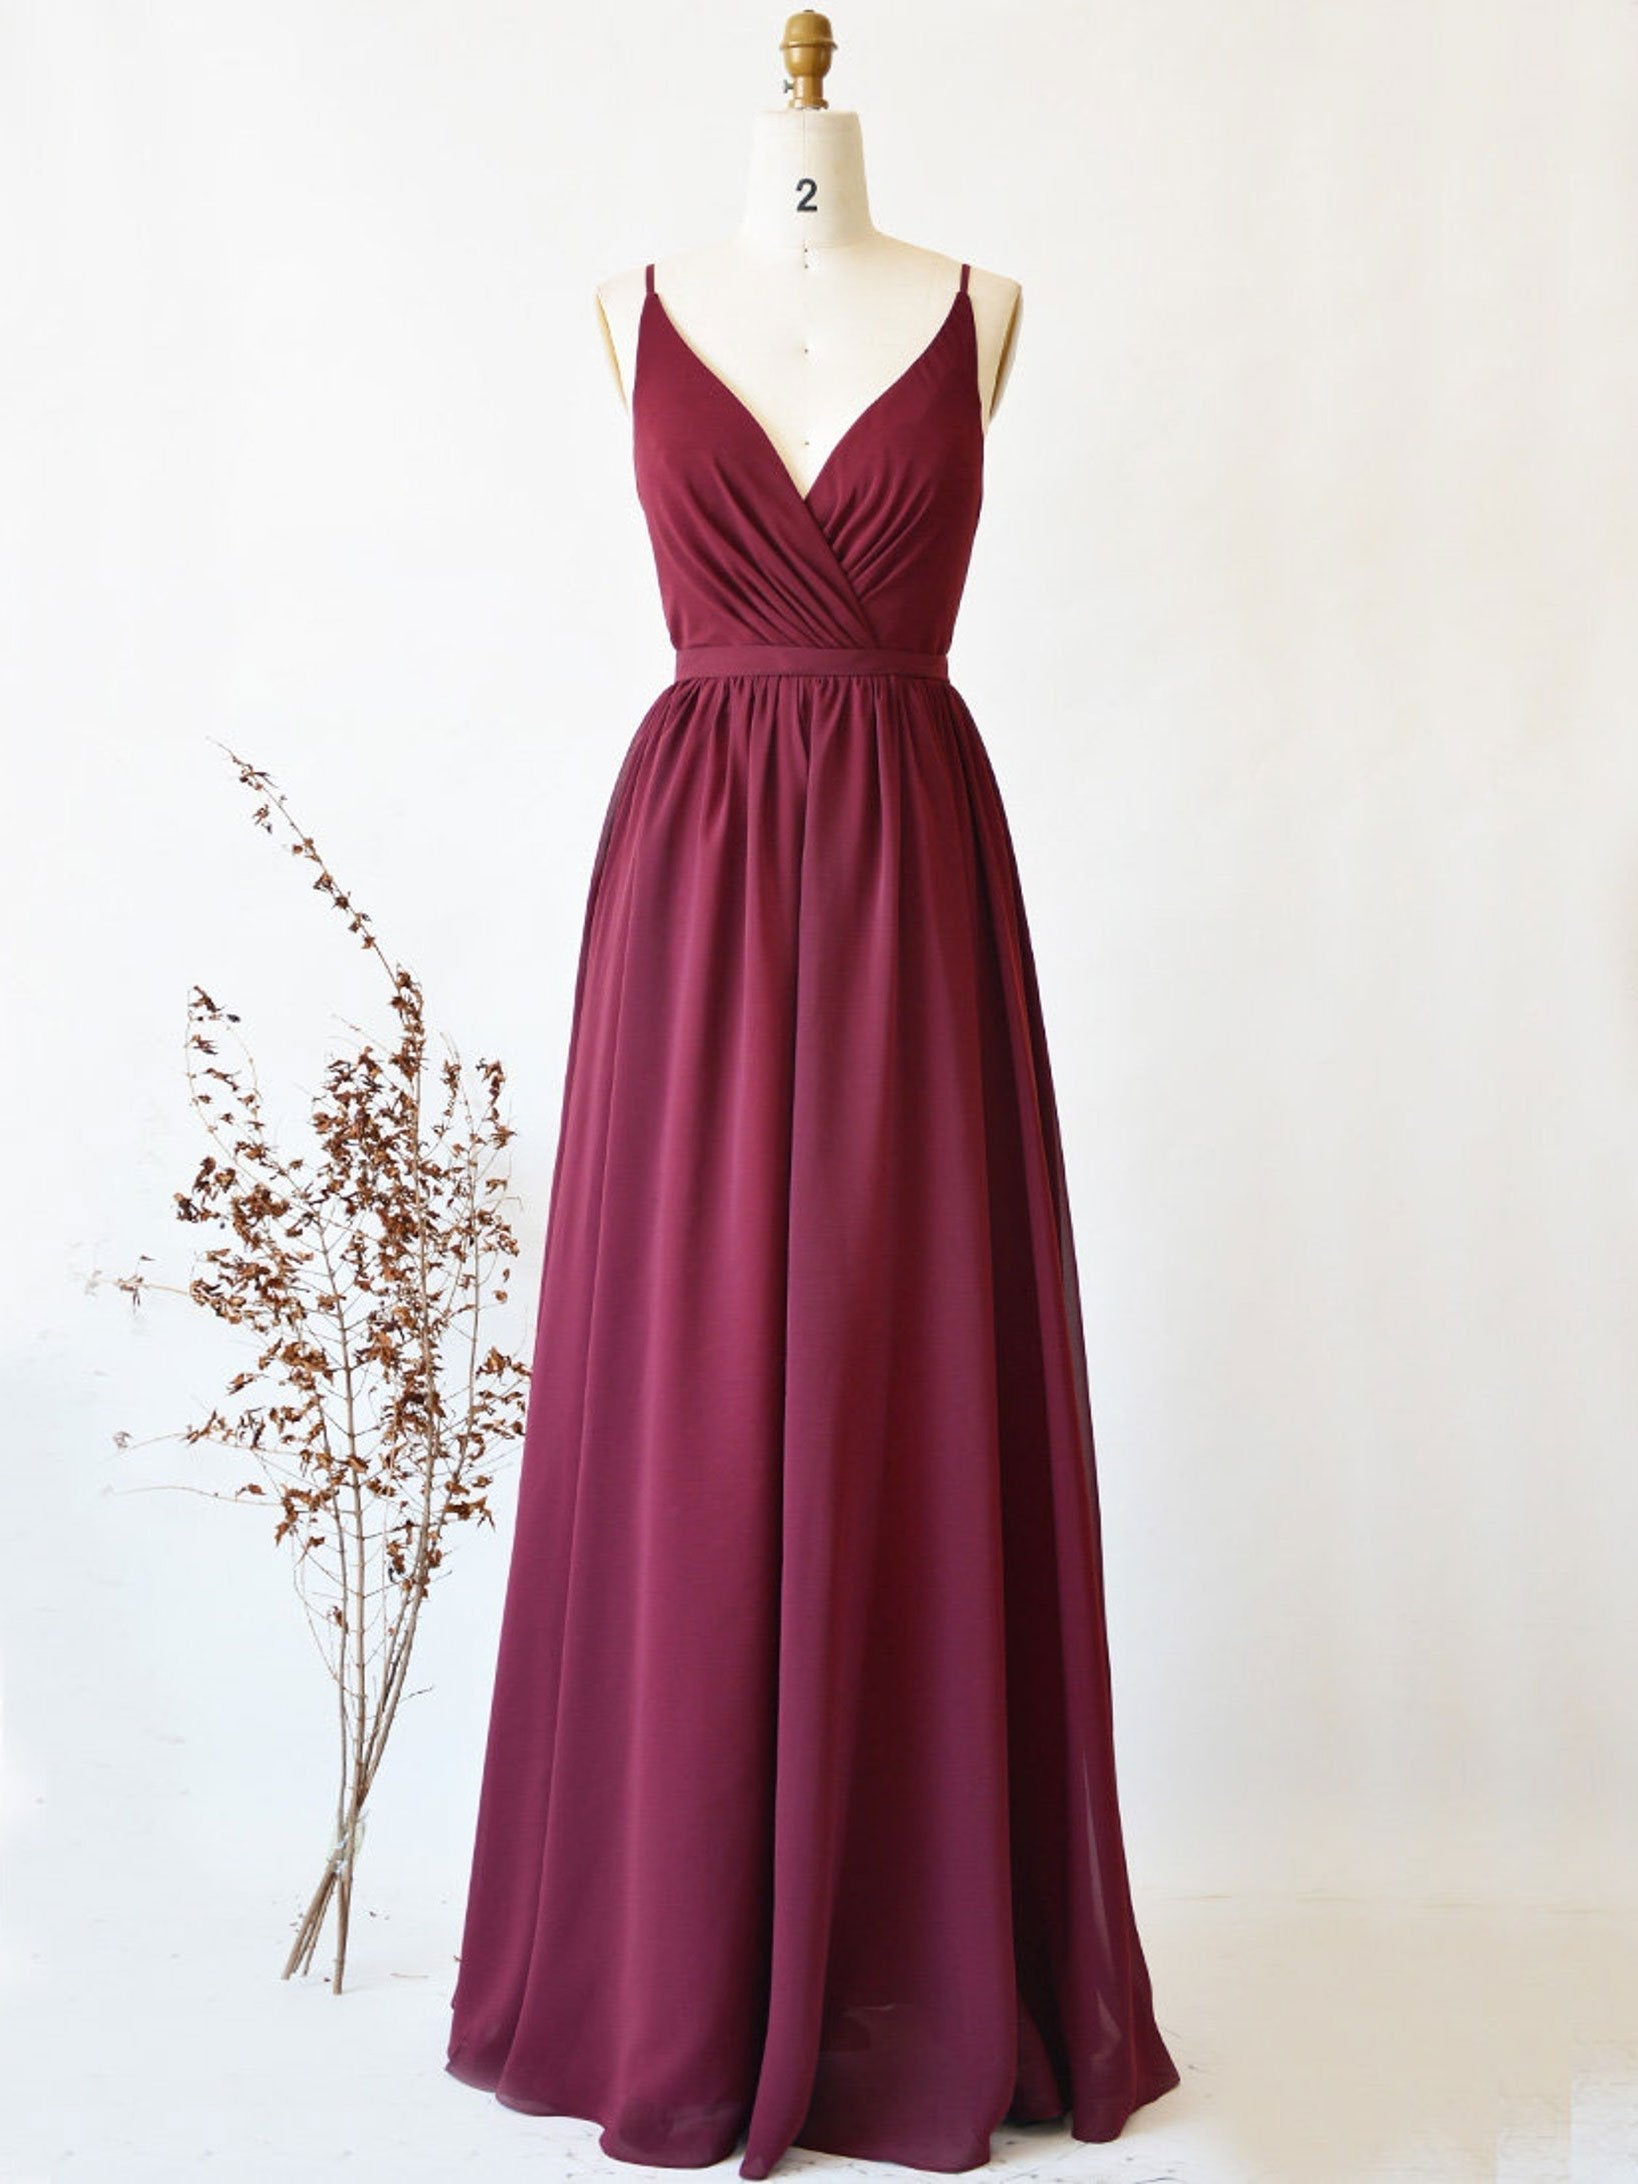 Simple burgundy chiffon lace long Corset Prom dresses, cheap women Corset Formal evening dress outfit, Prom Dress Gold